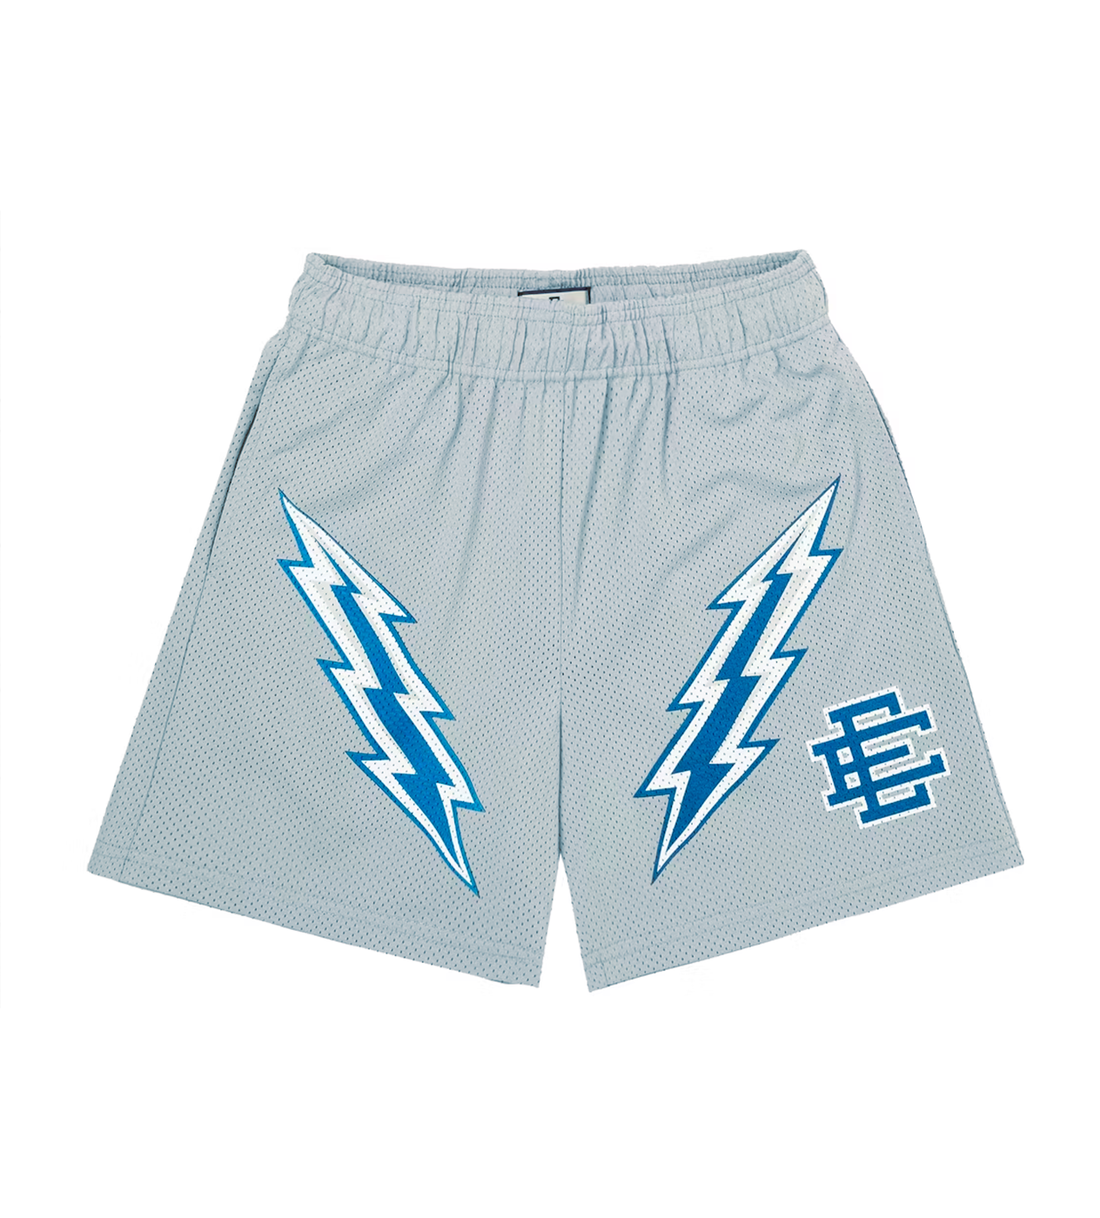 Eric Emanuel Grey Lightning Grey/Blue Shorts